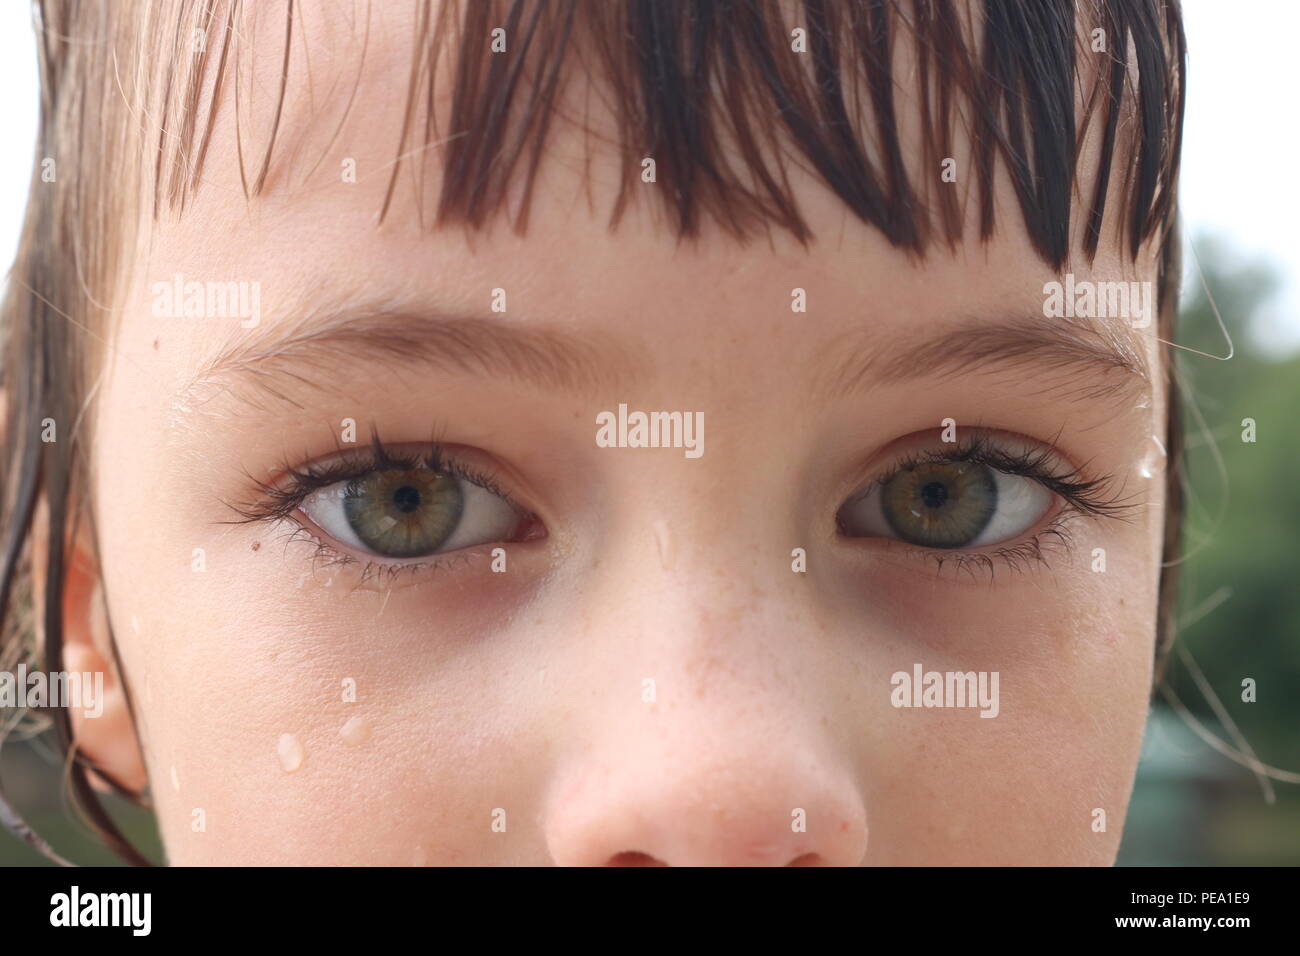 Closeup of a young child's green eyed intense gaze Stock Photo